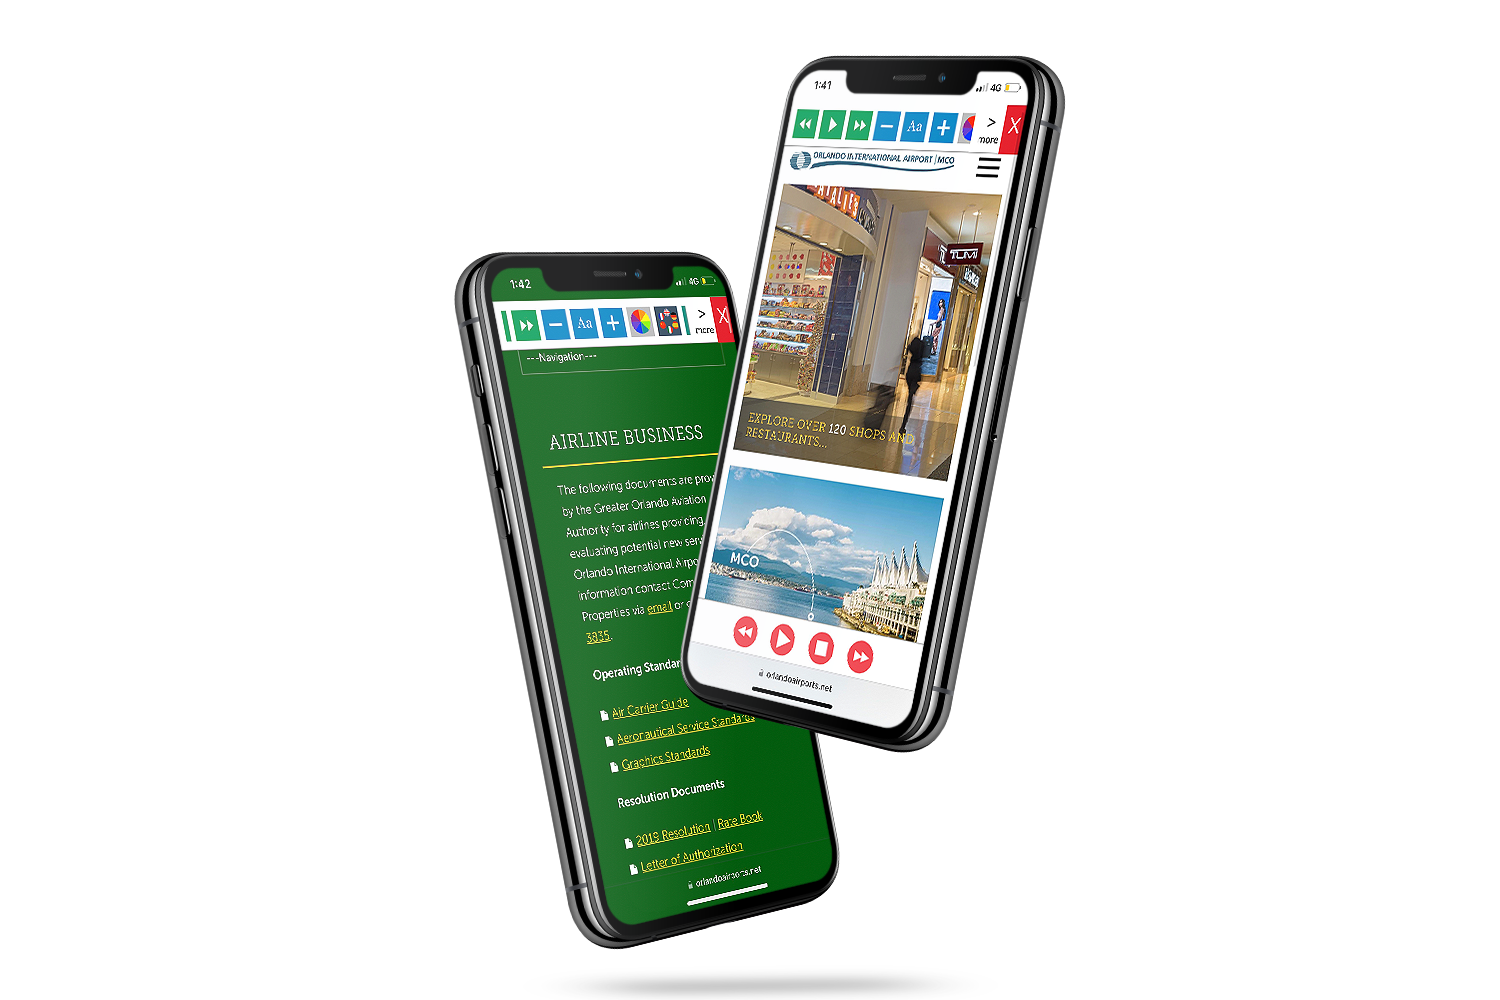 Mobiles with Orlando International Airport website using the Recite Me assistive toolbar